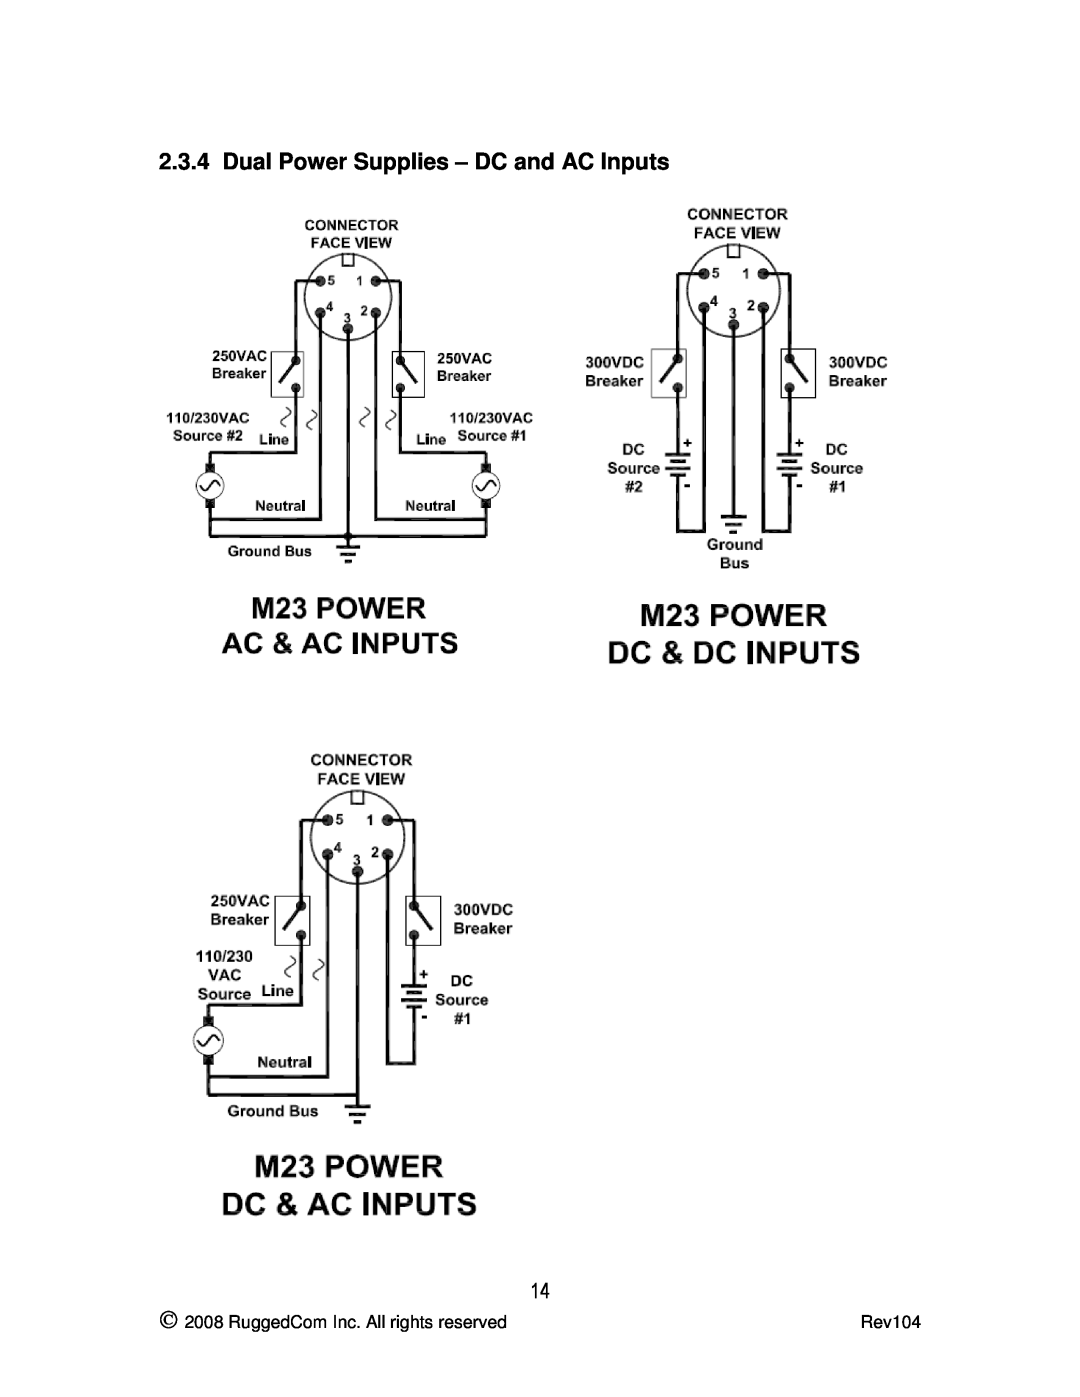 RuggedCom RS969 manual Dual Power Supplies - DC and AC Inputs,  2008 RuggedCom Inc. All rights reserved, Rev104 